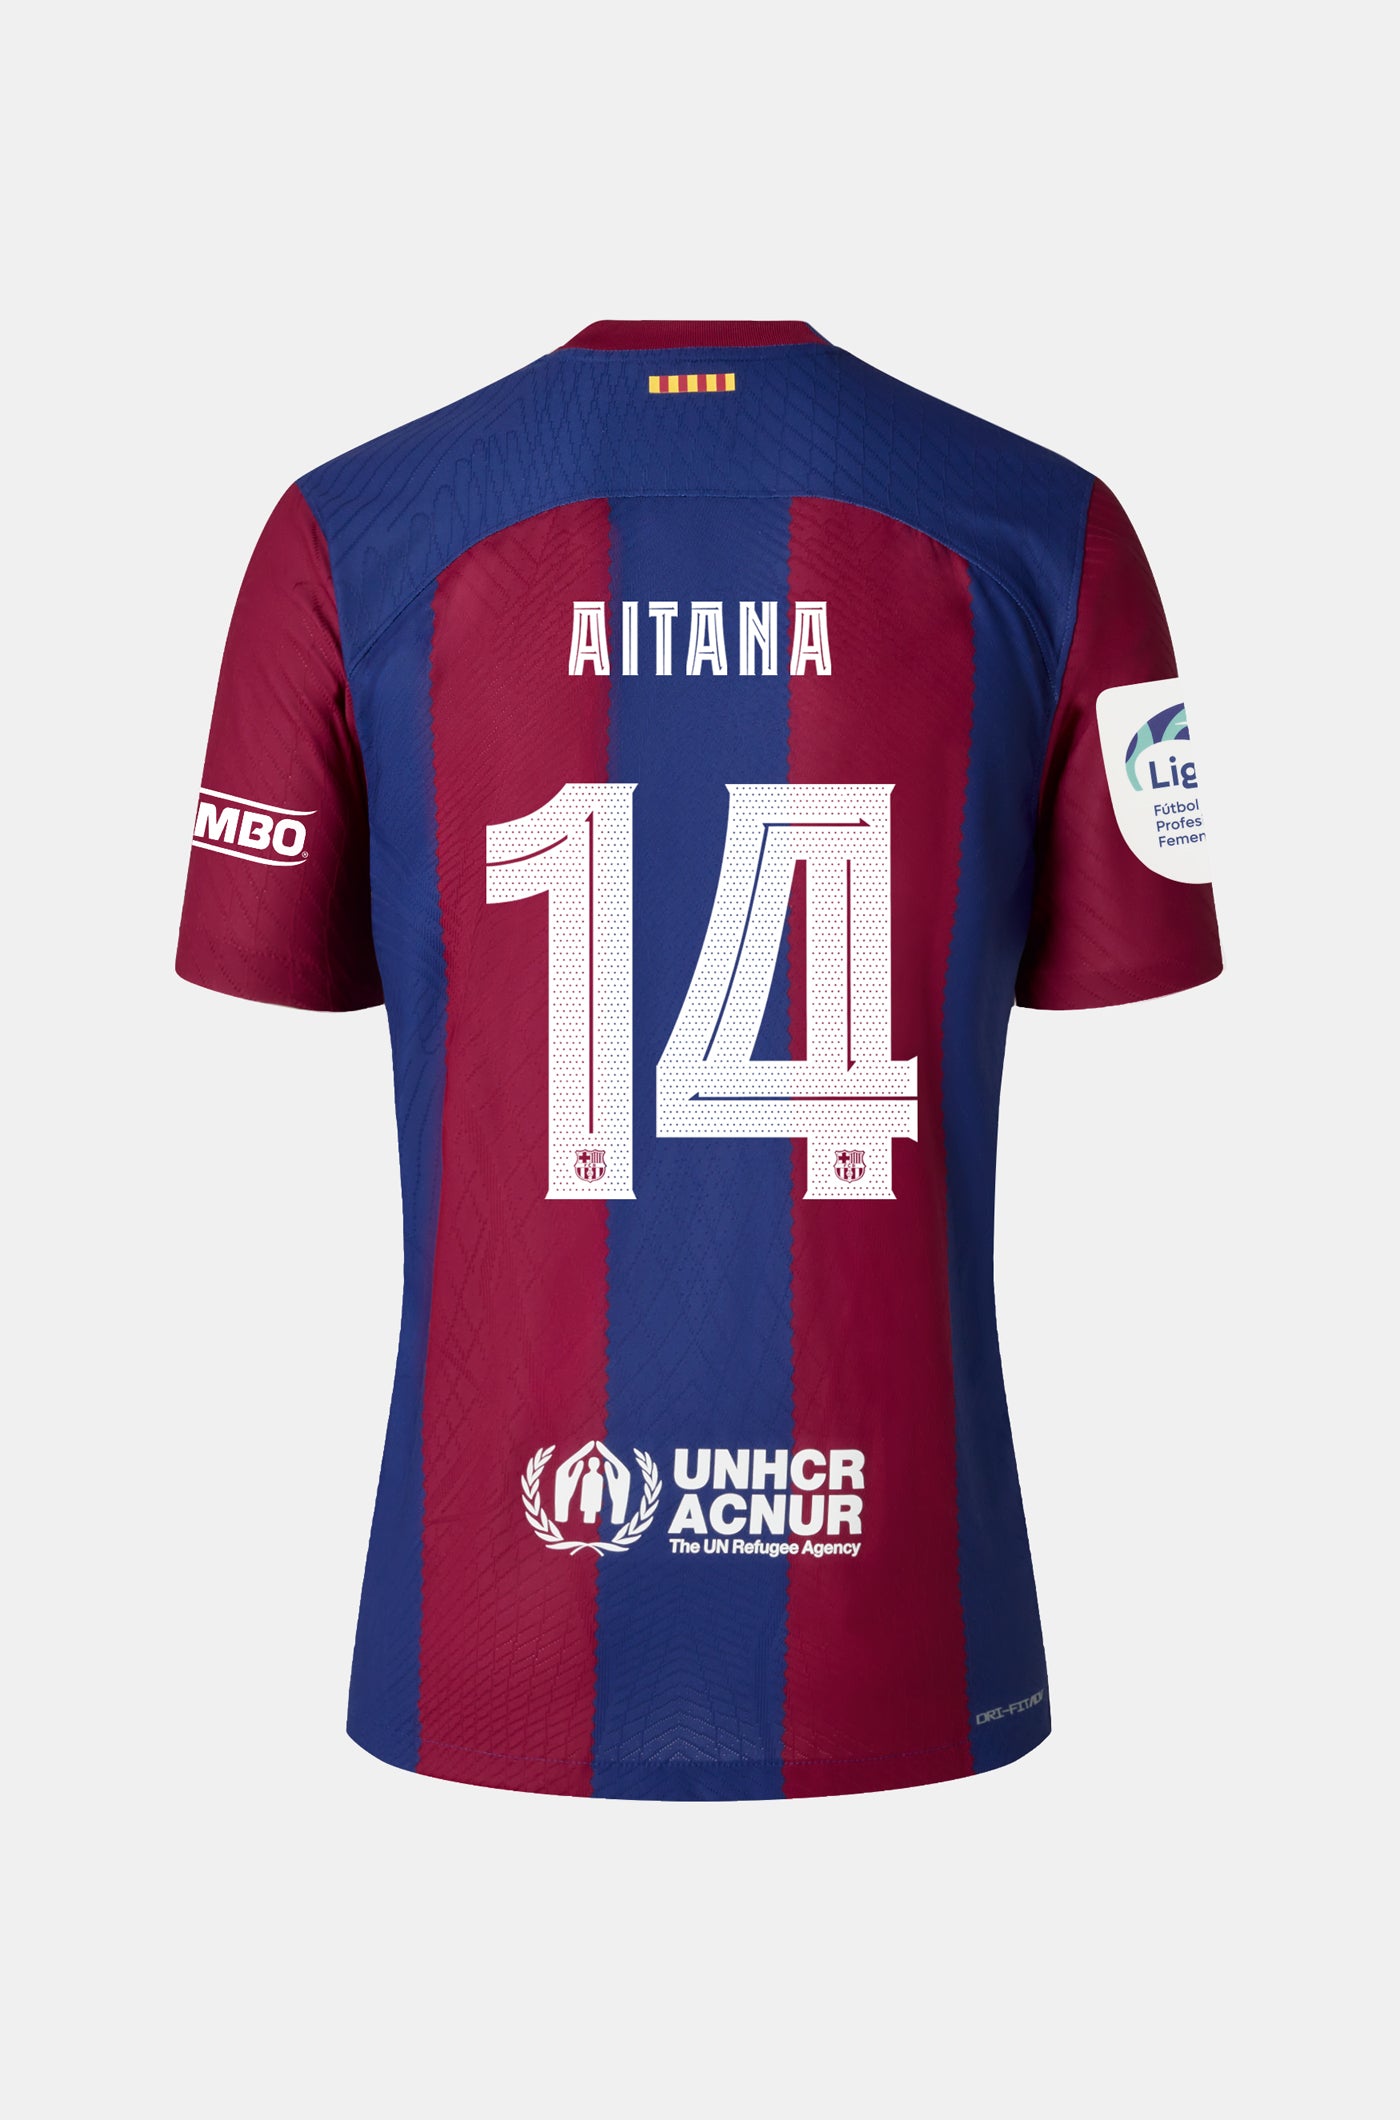 Liga F FC Barcelona home shirt 23/24 - Women - AITANA